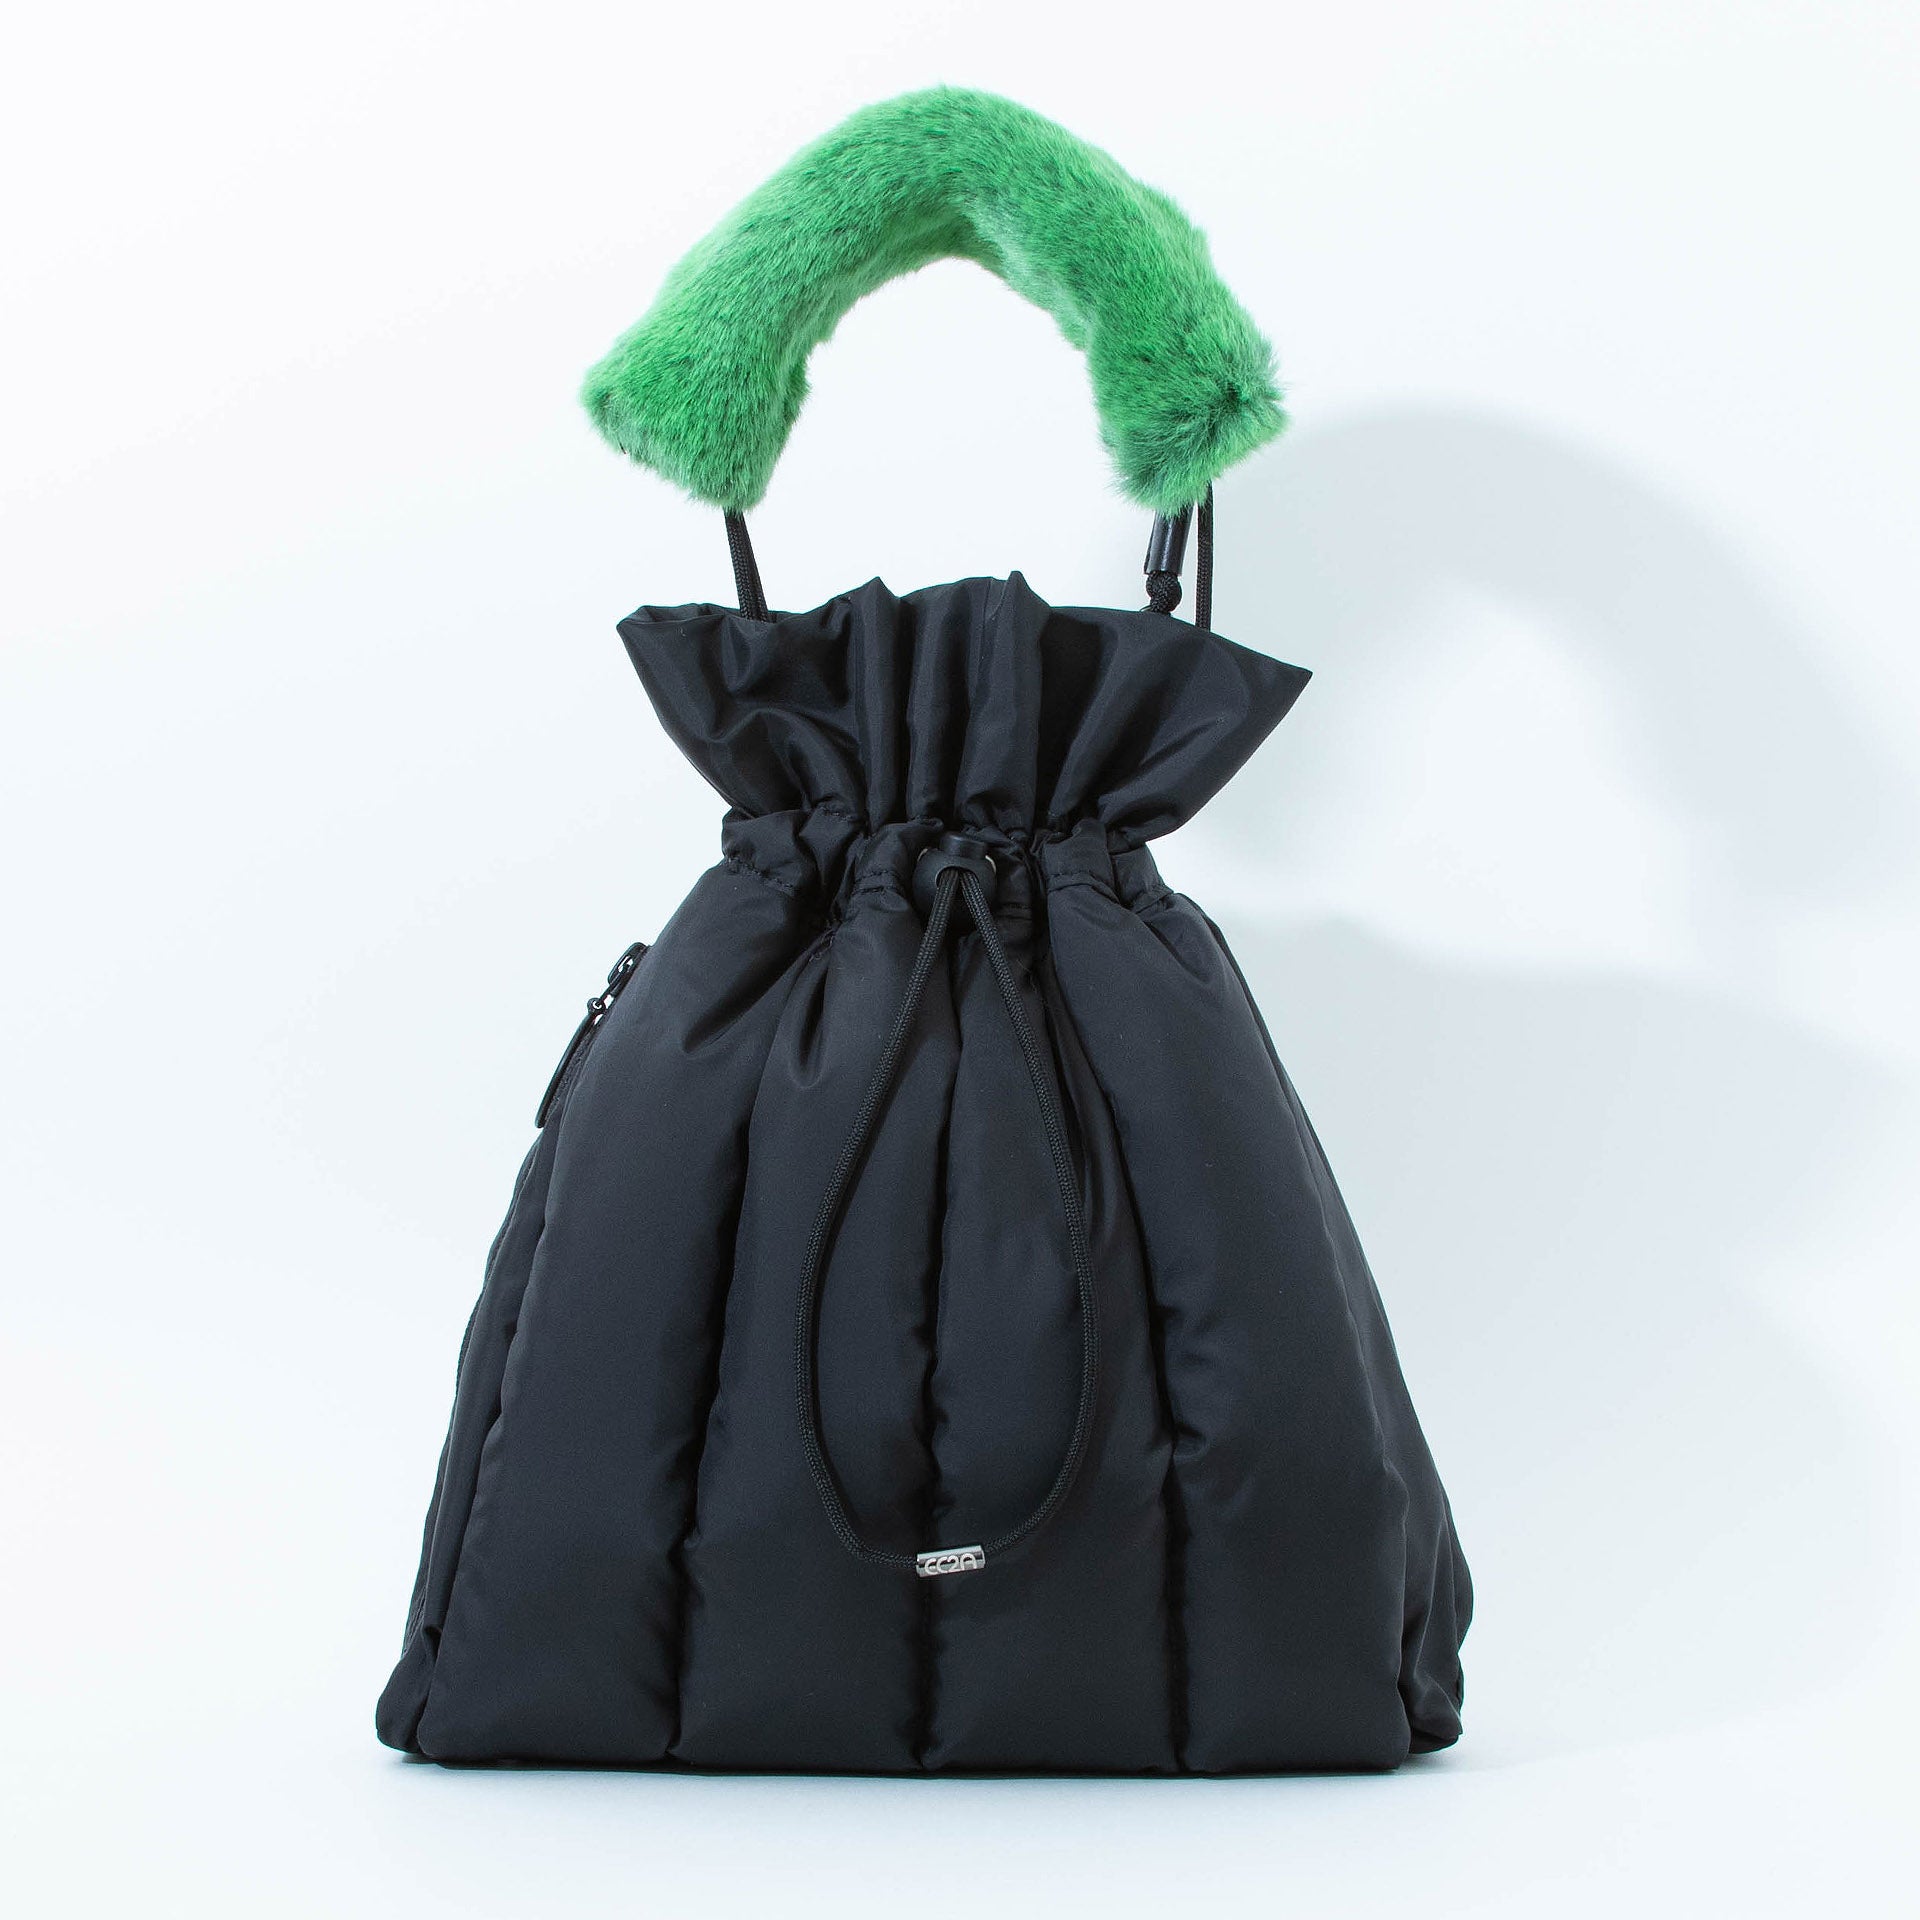 EC2A black duck down puffer drawstring bag with short handle green caterpillar shoulder accessory